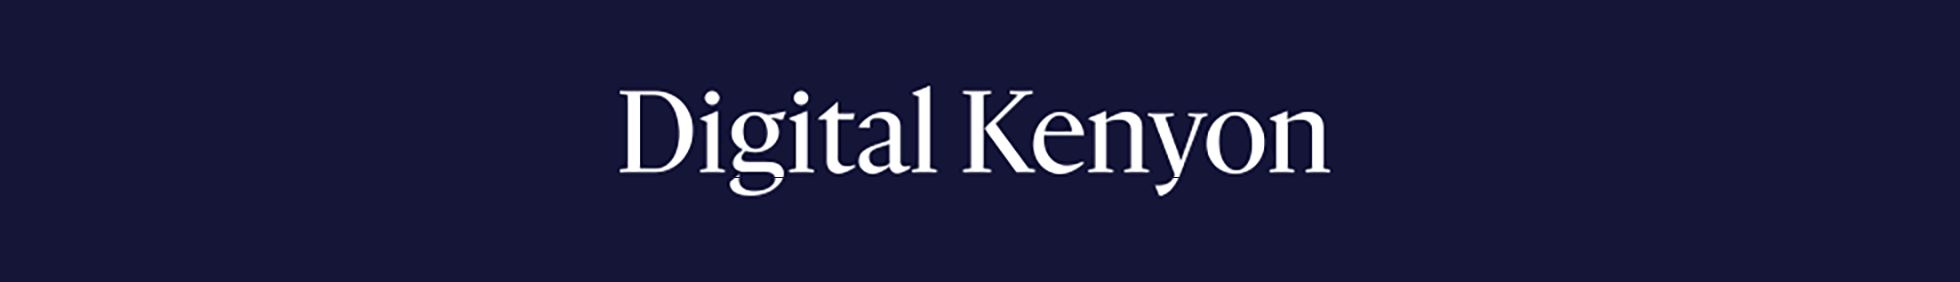 Digital Kenyon: Research, Scholarship, and Creative Exchange